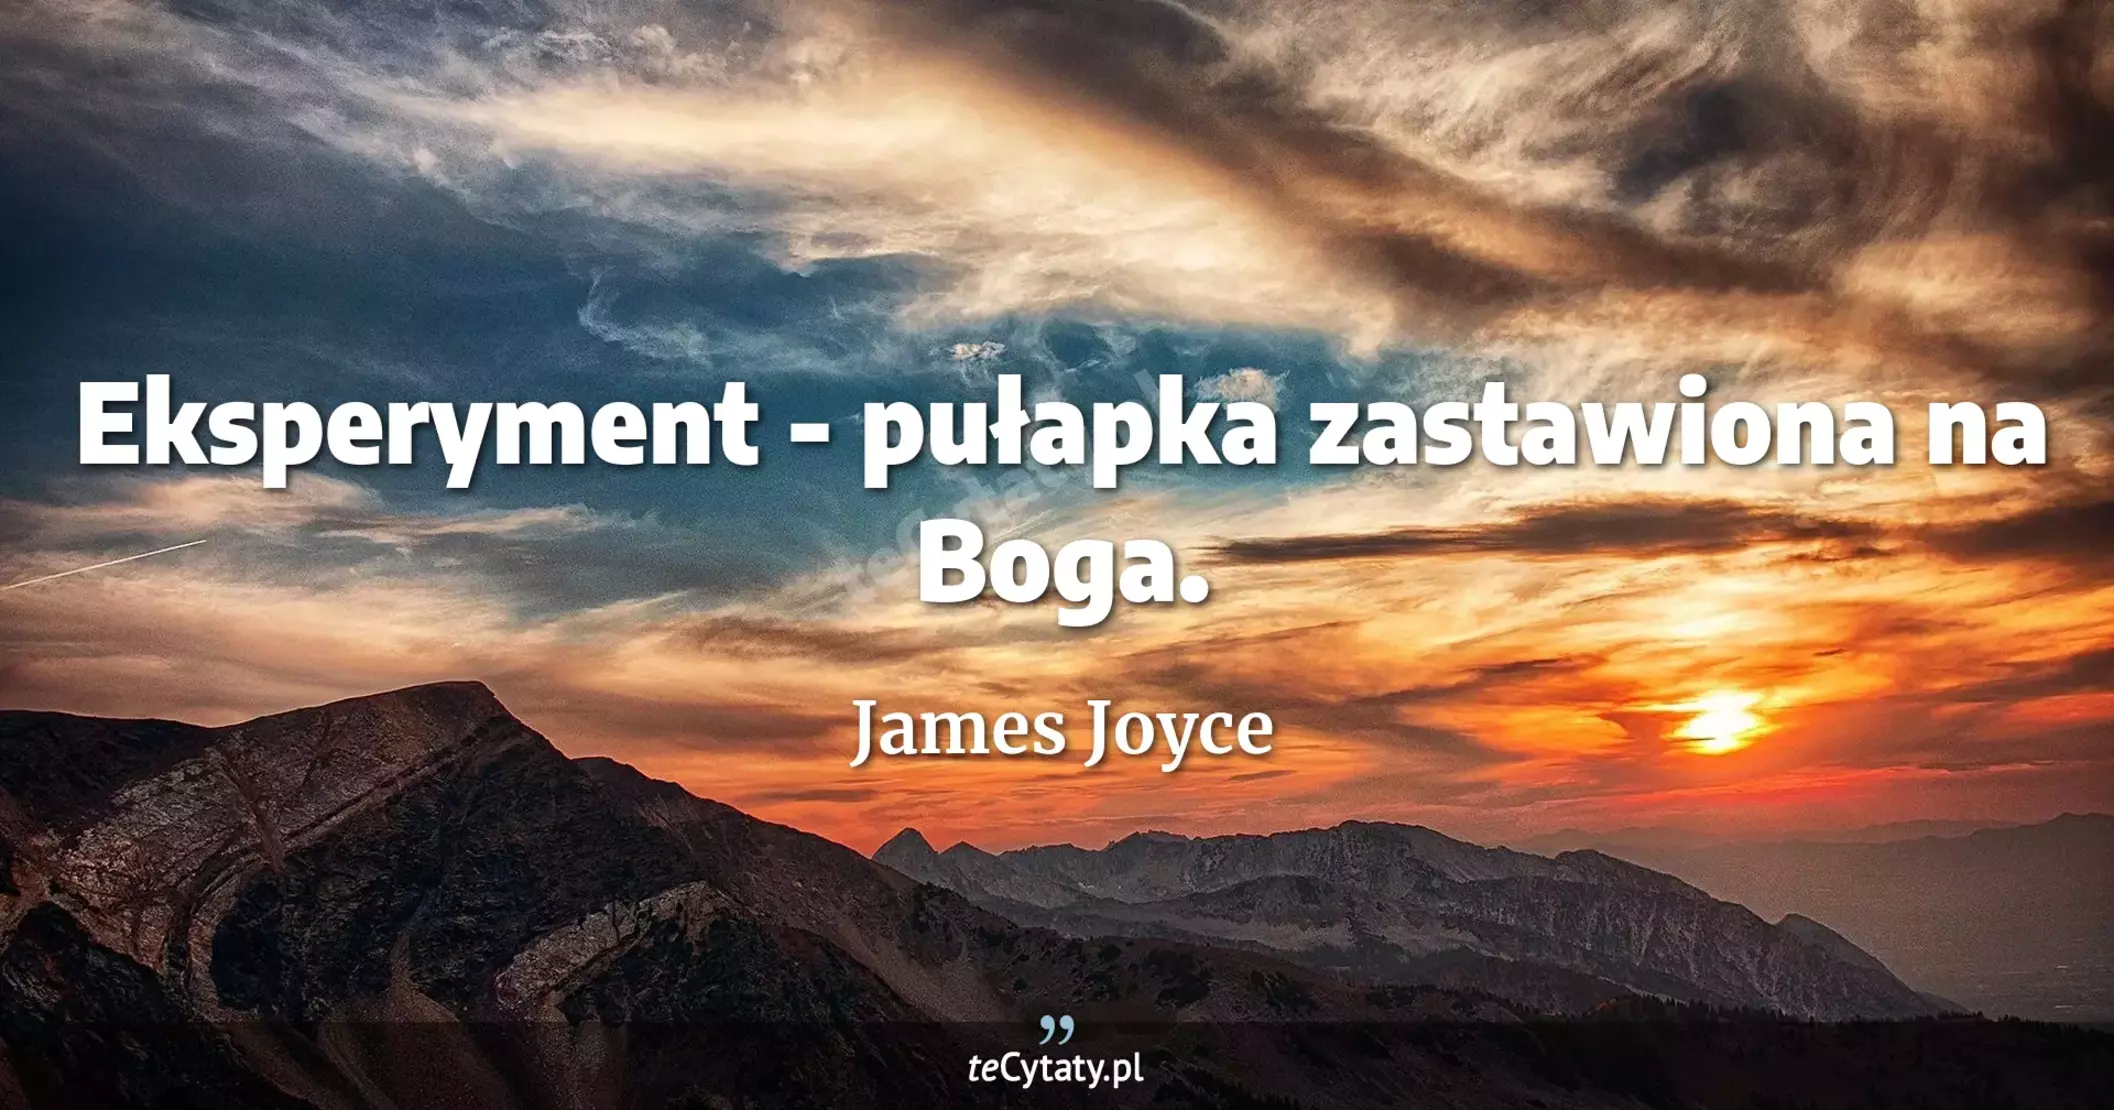 Eksperyment - pułapka zastawiona na Boga. - James Joyce